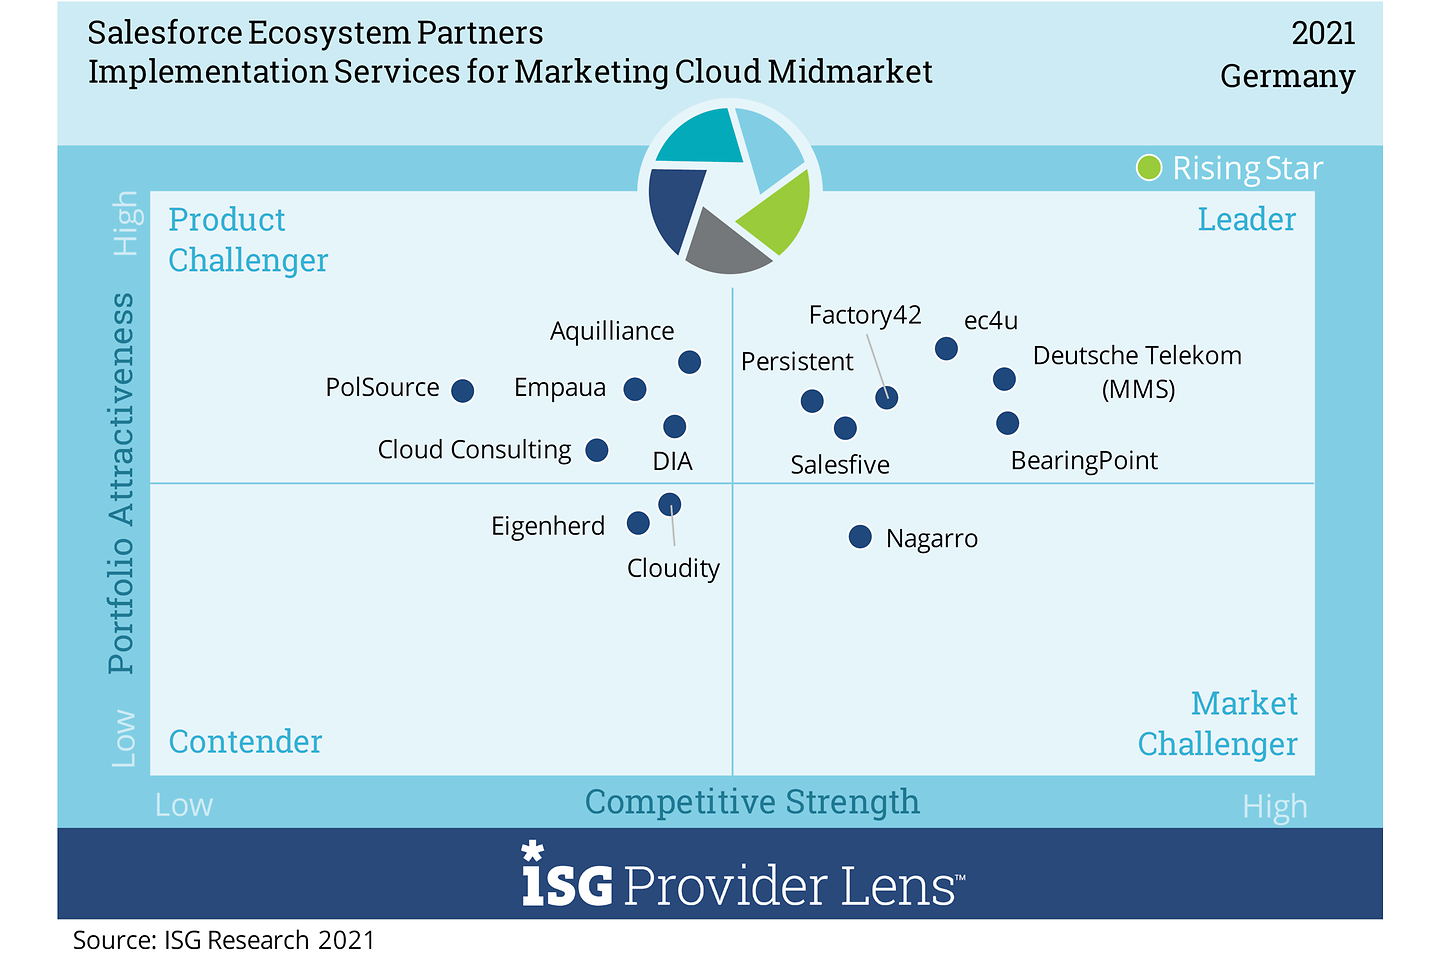 Implementation Services for Marketing Cloud Midmarket